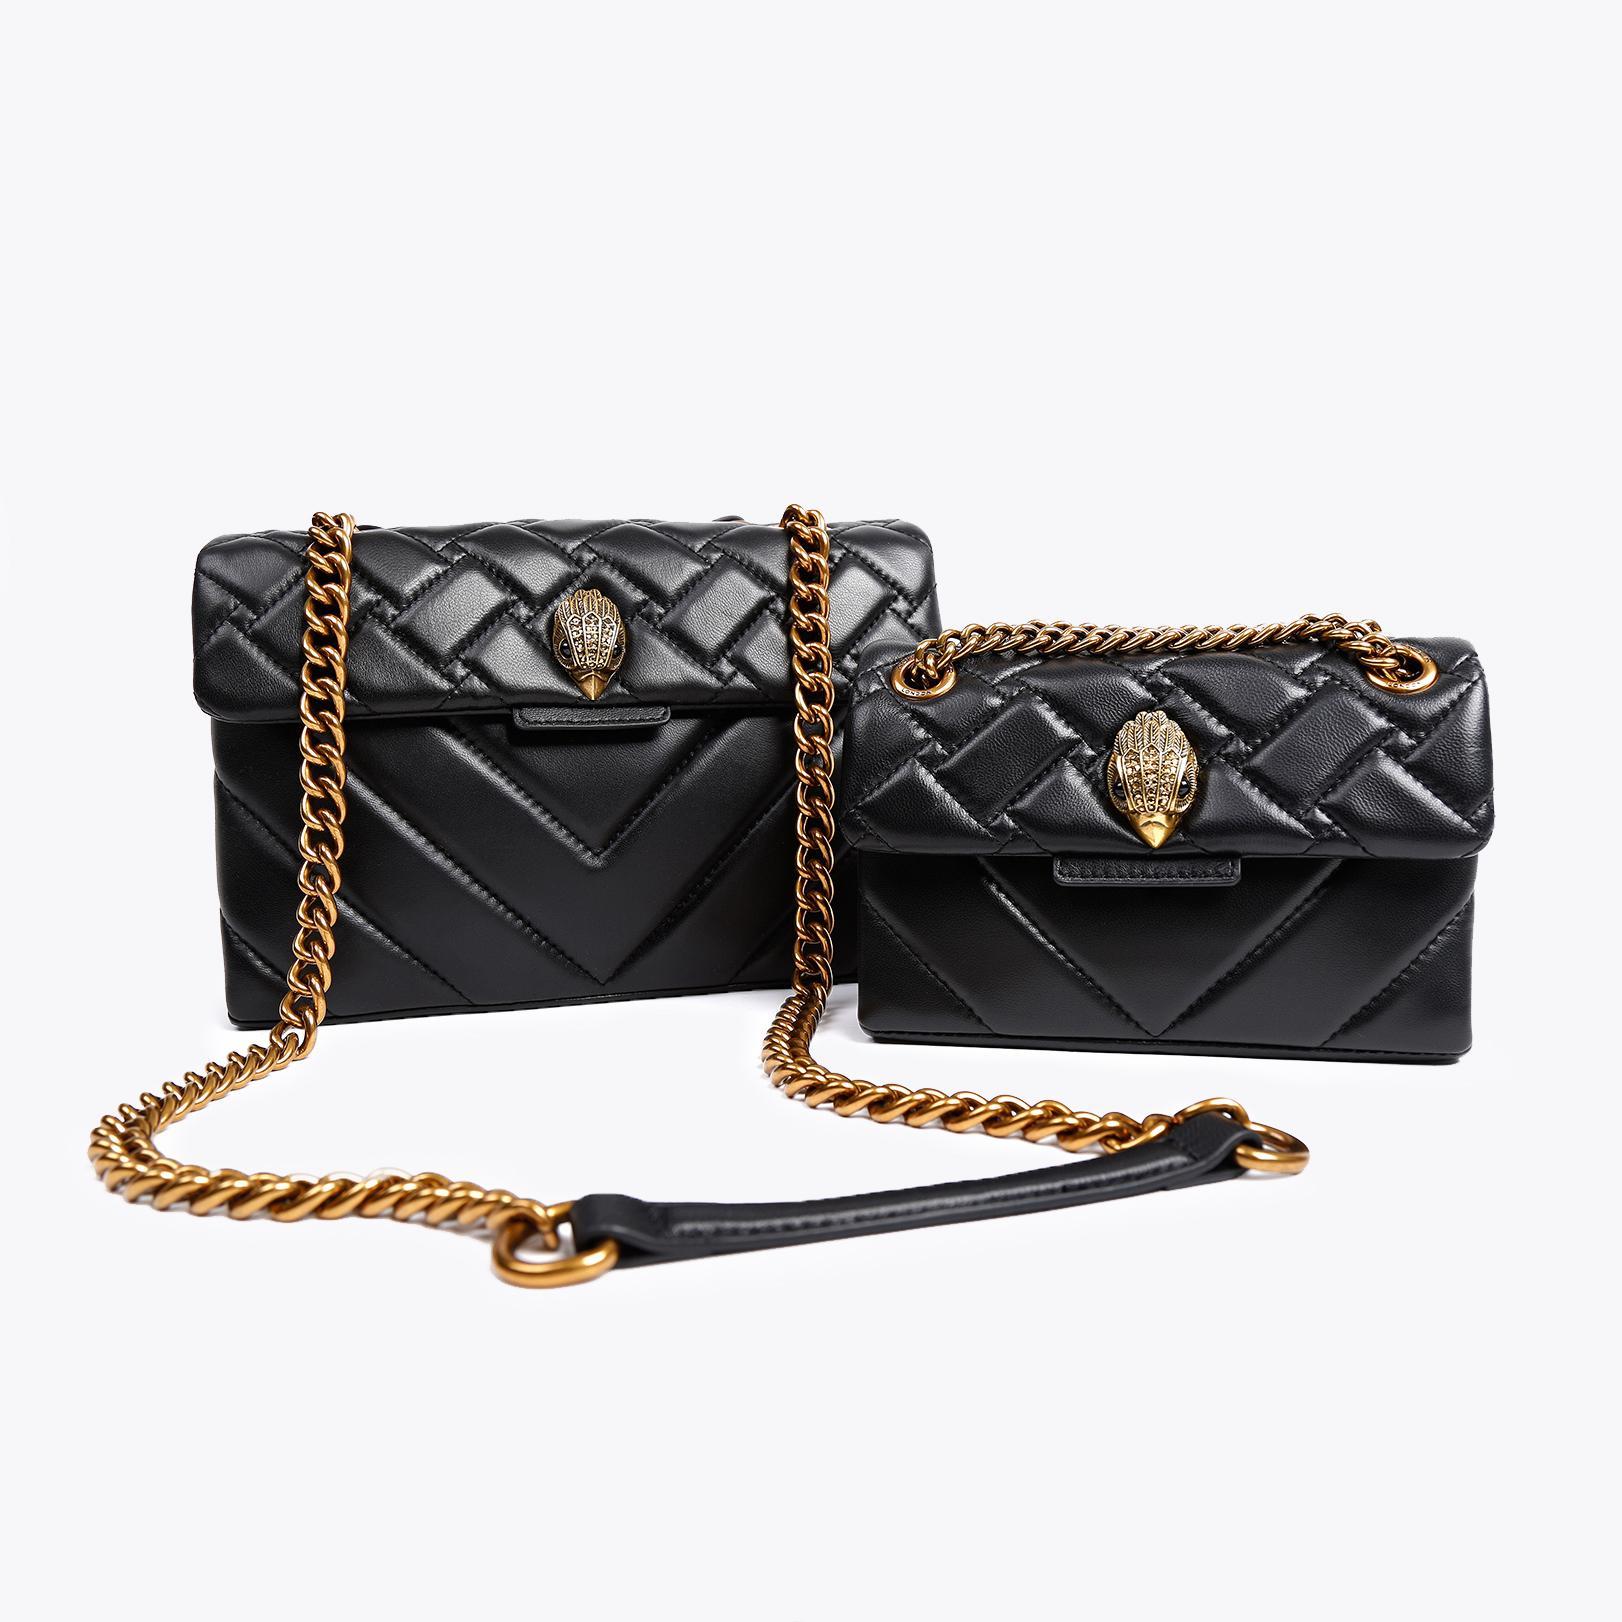 MINI KENSINGTON X BAG Black Comb Quilted Leather Mini Bag by KURT ...